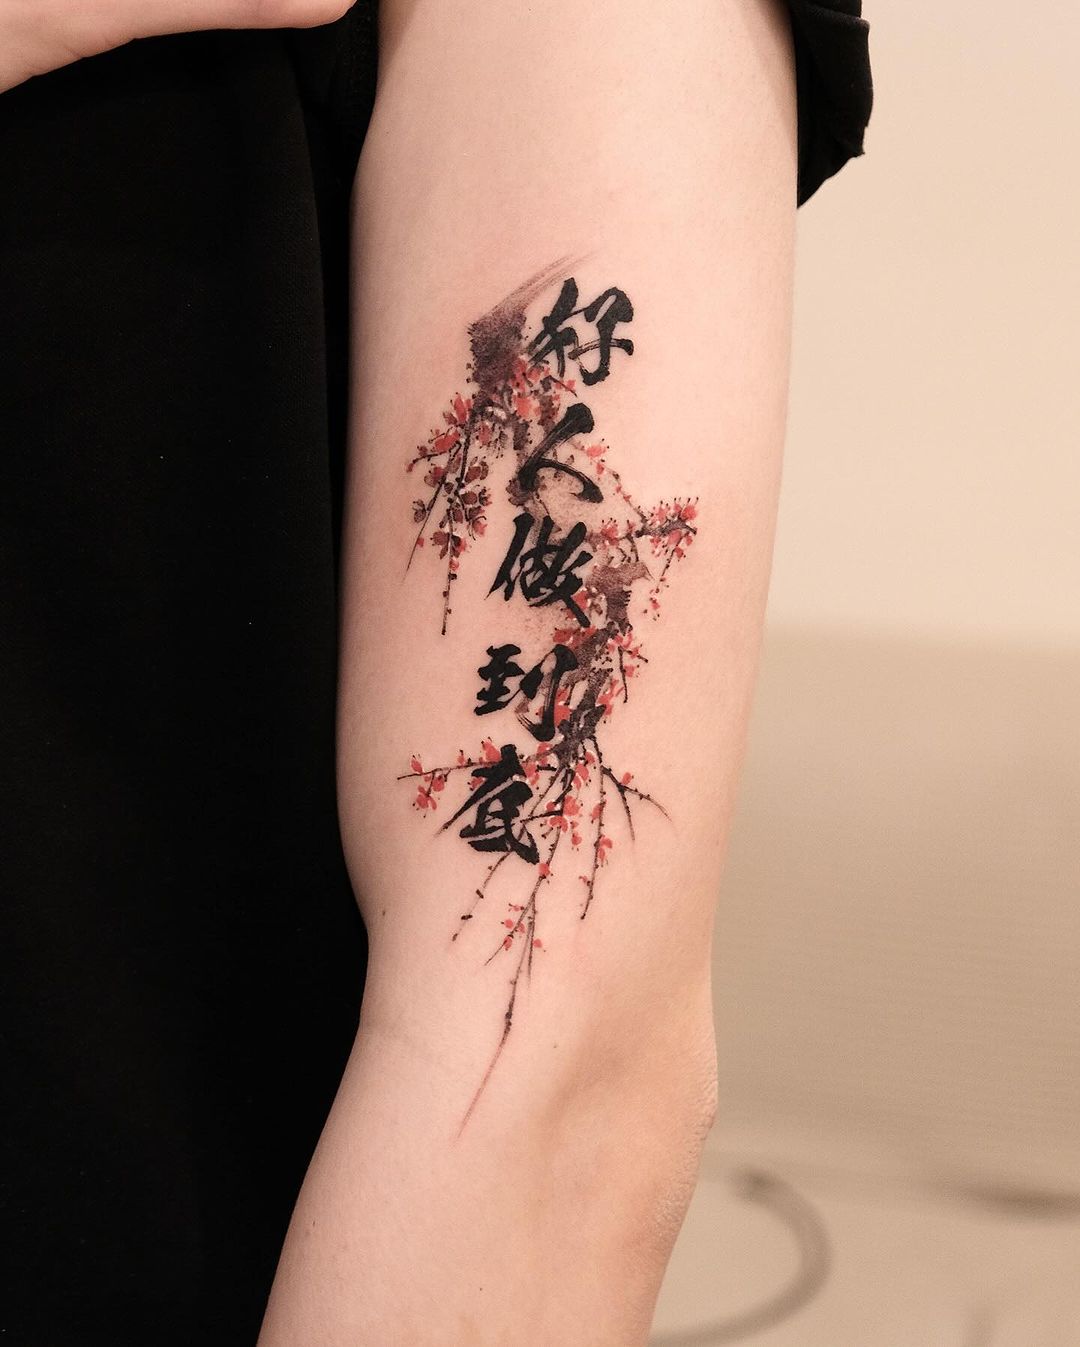 asbtract cherry blossom tattoo by ati.ful